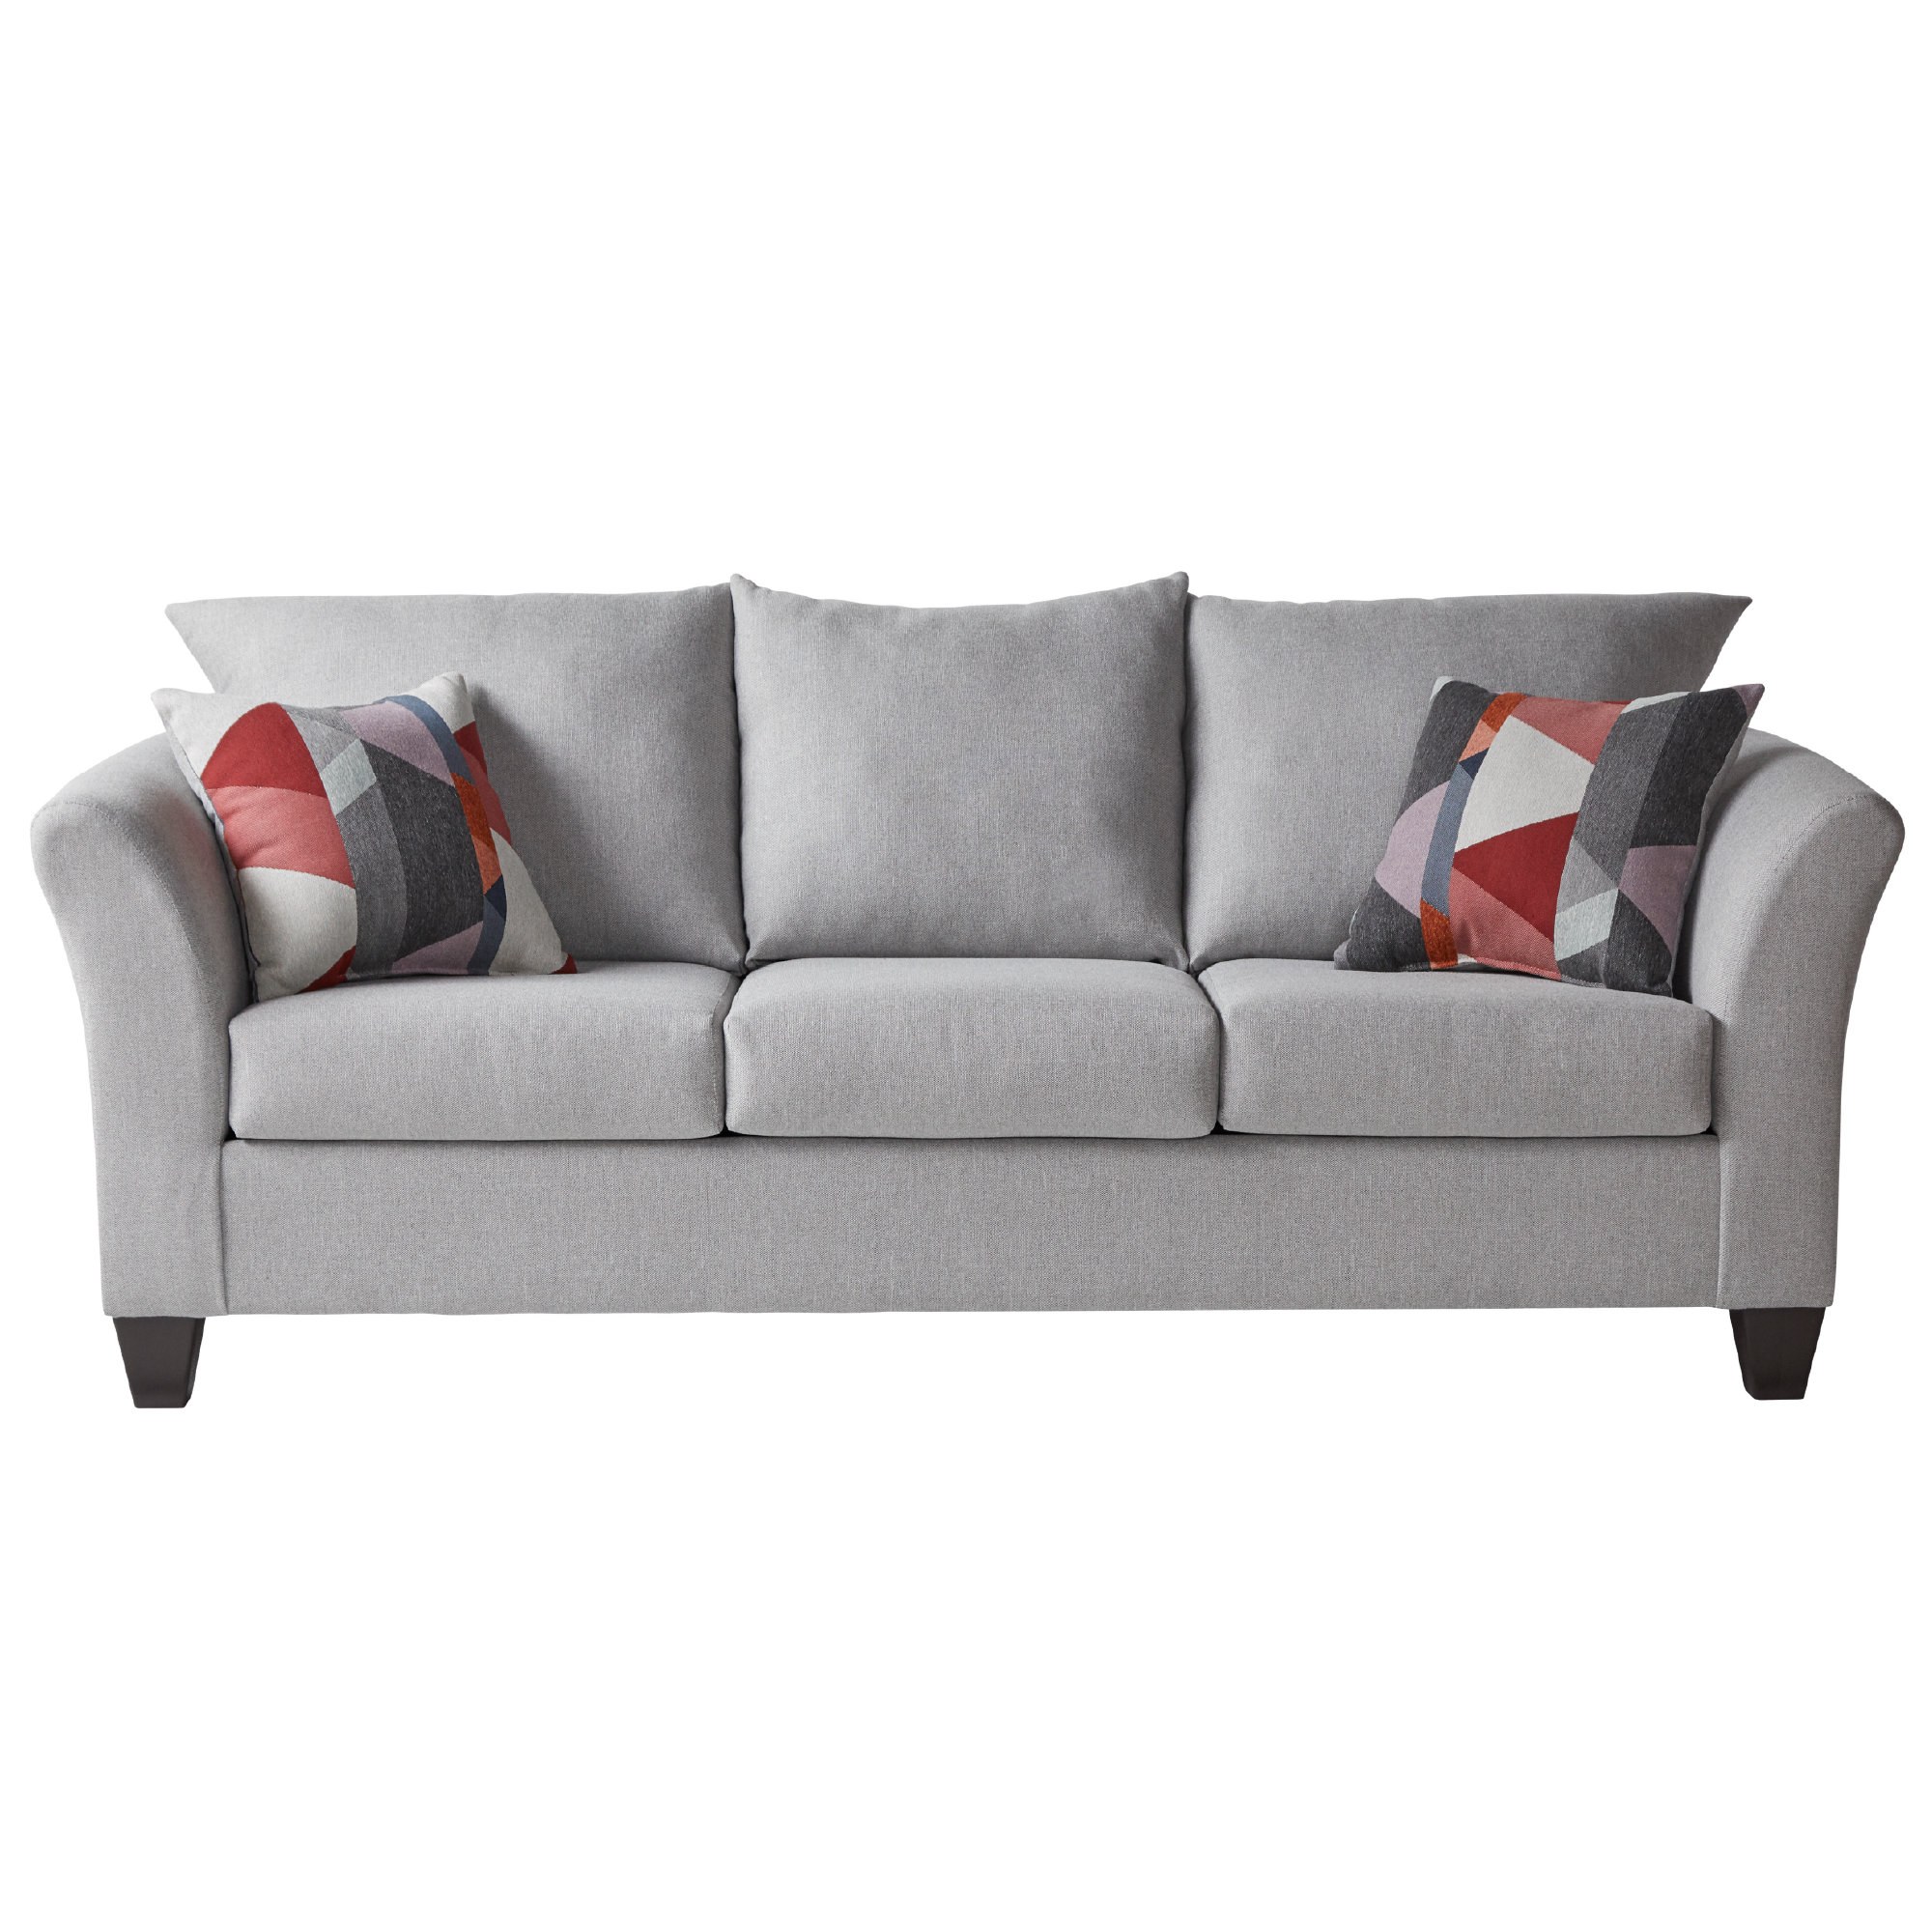 Addington Co Regent Street Sofa (Silver Grey)